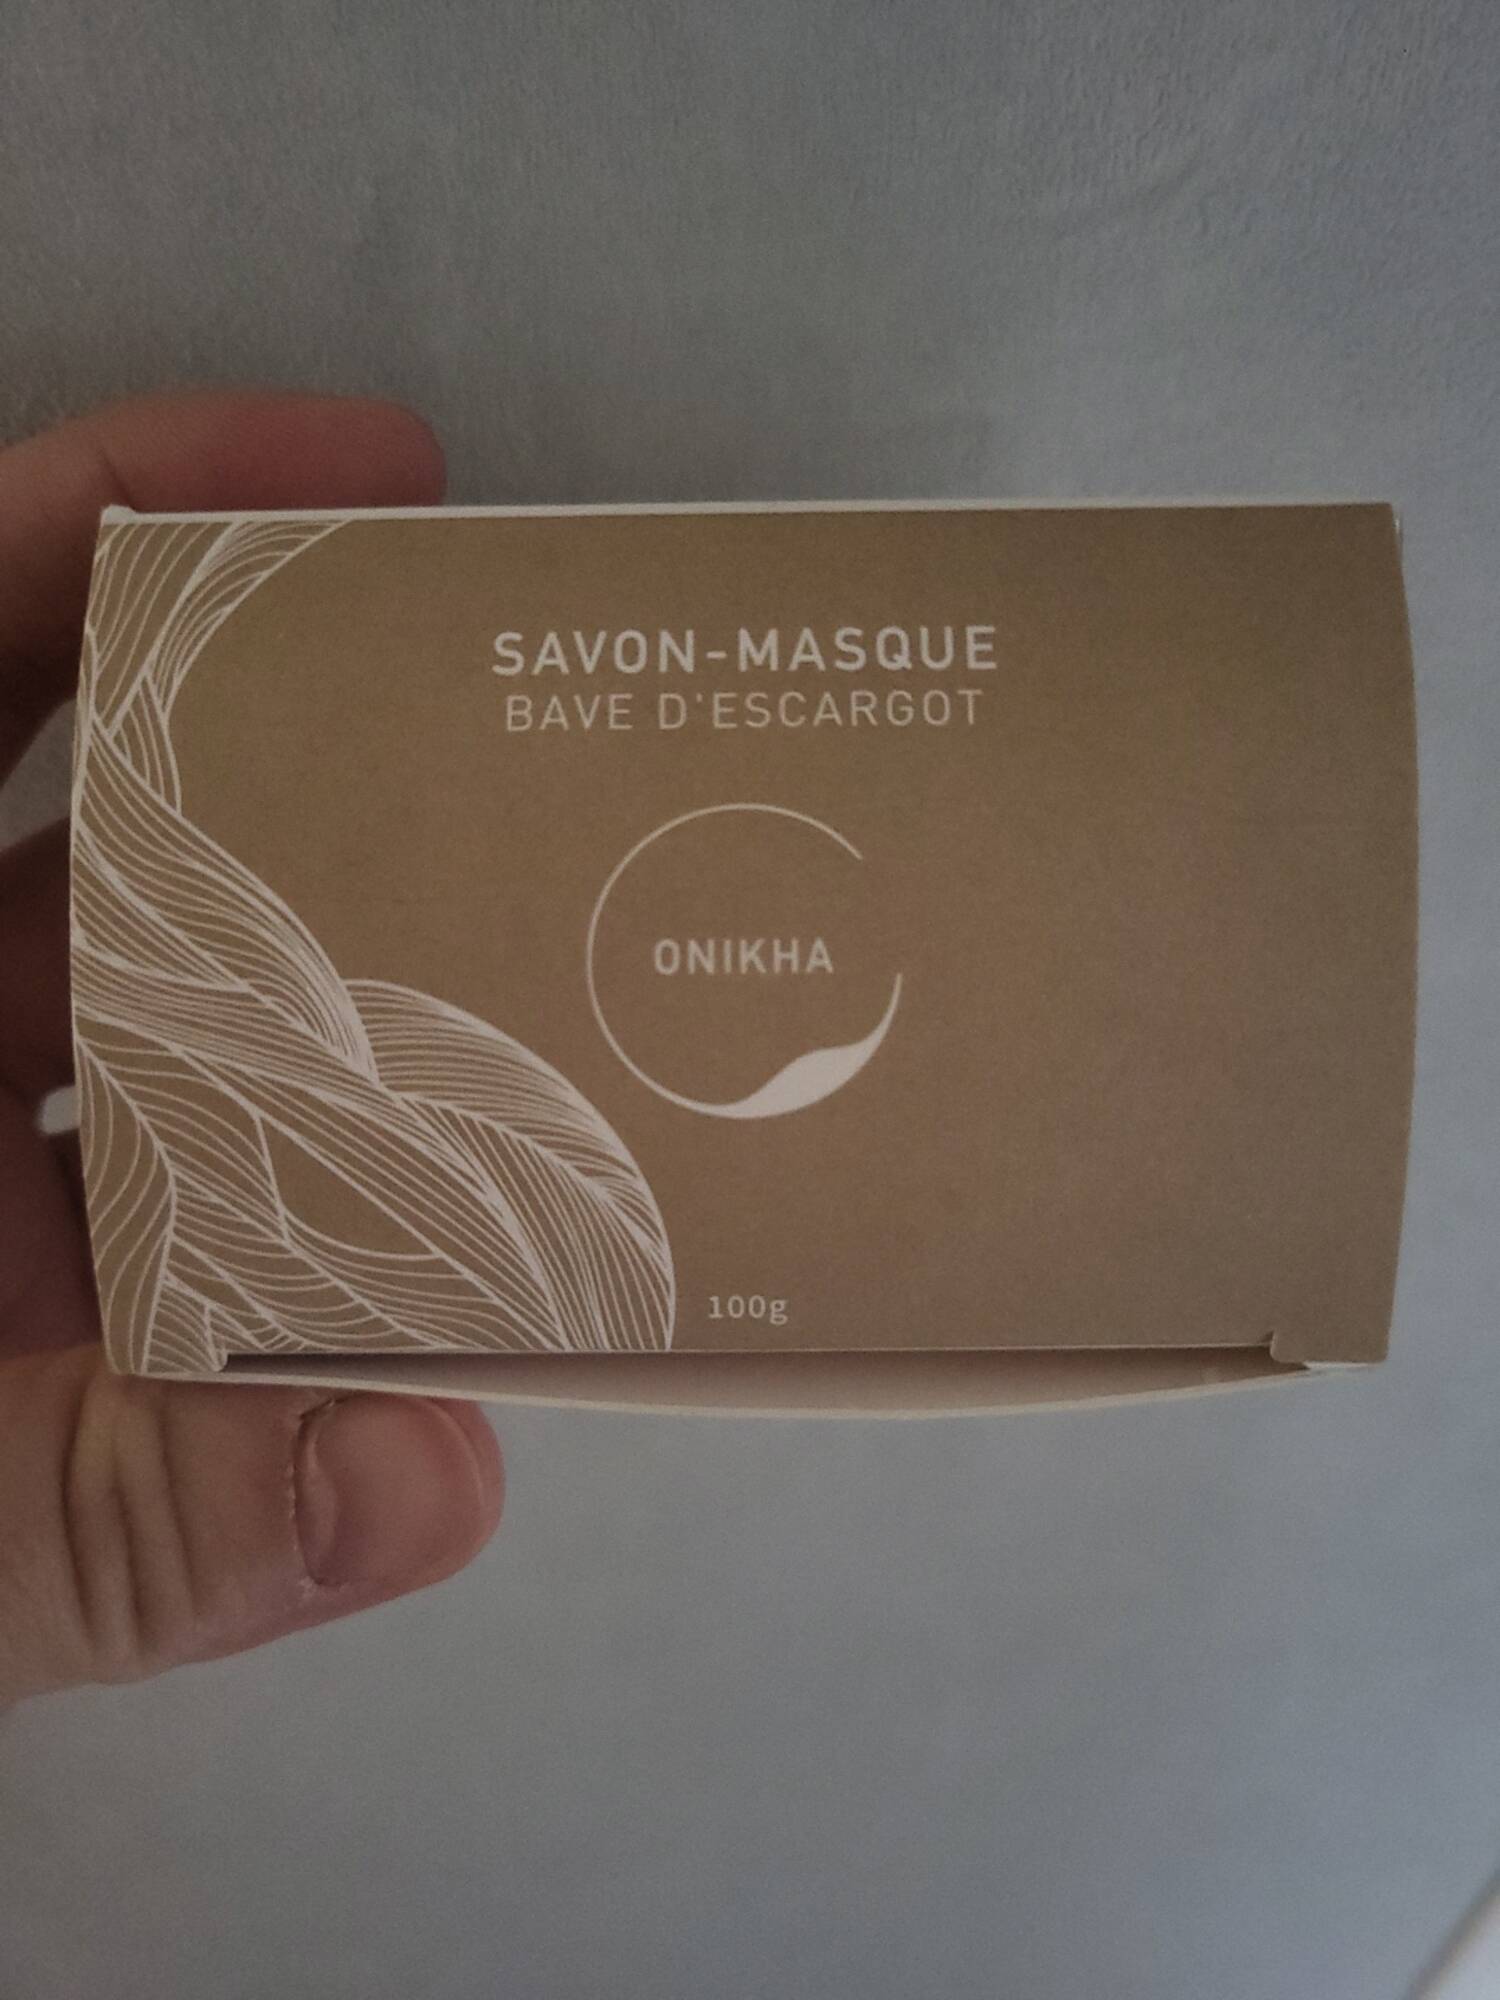 ONIKHA - Bave d'escargot - Savon-masque